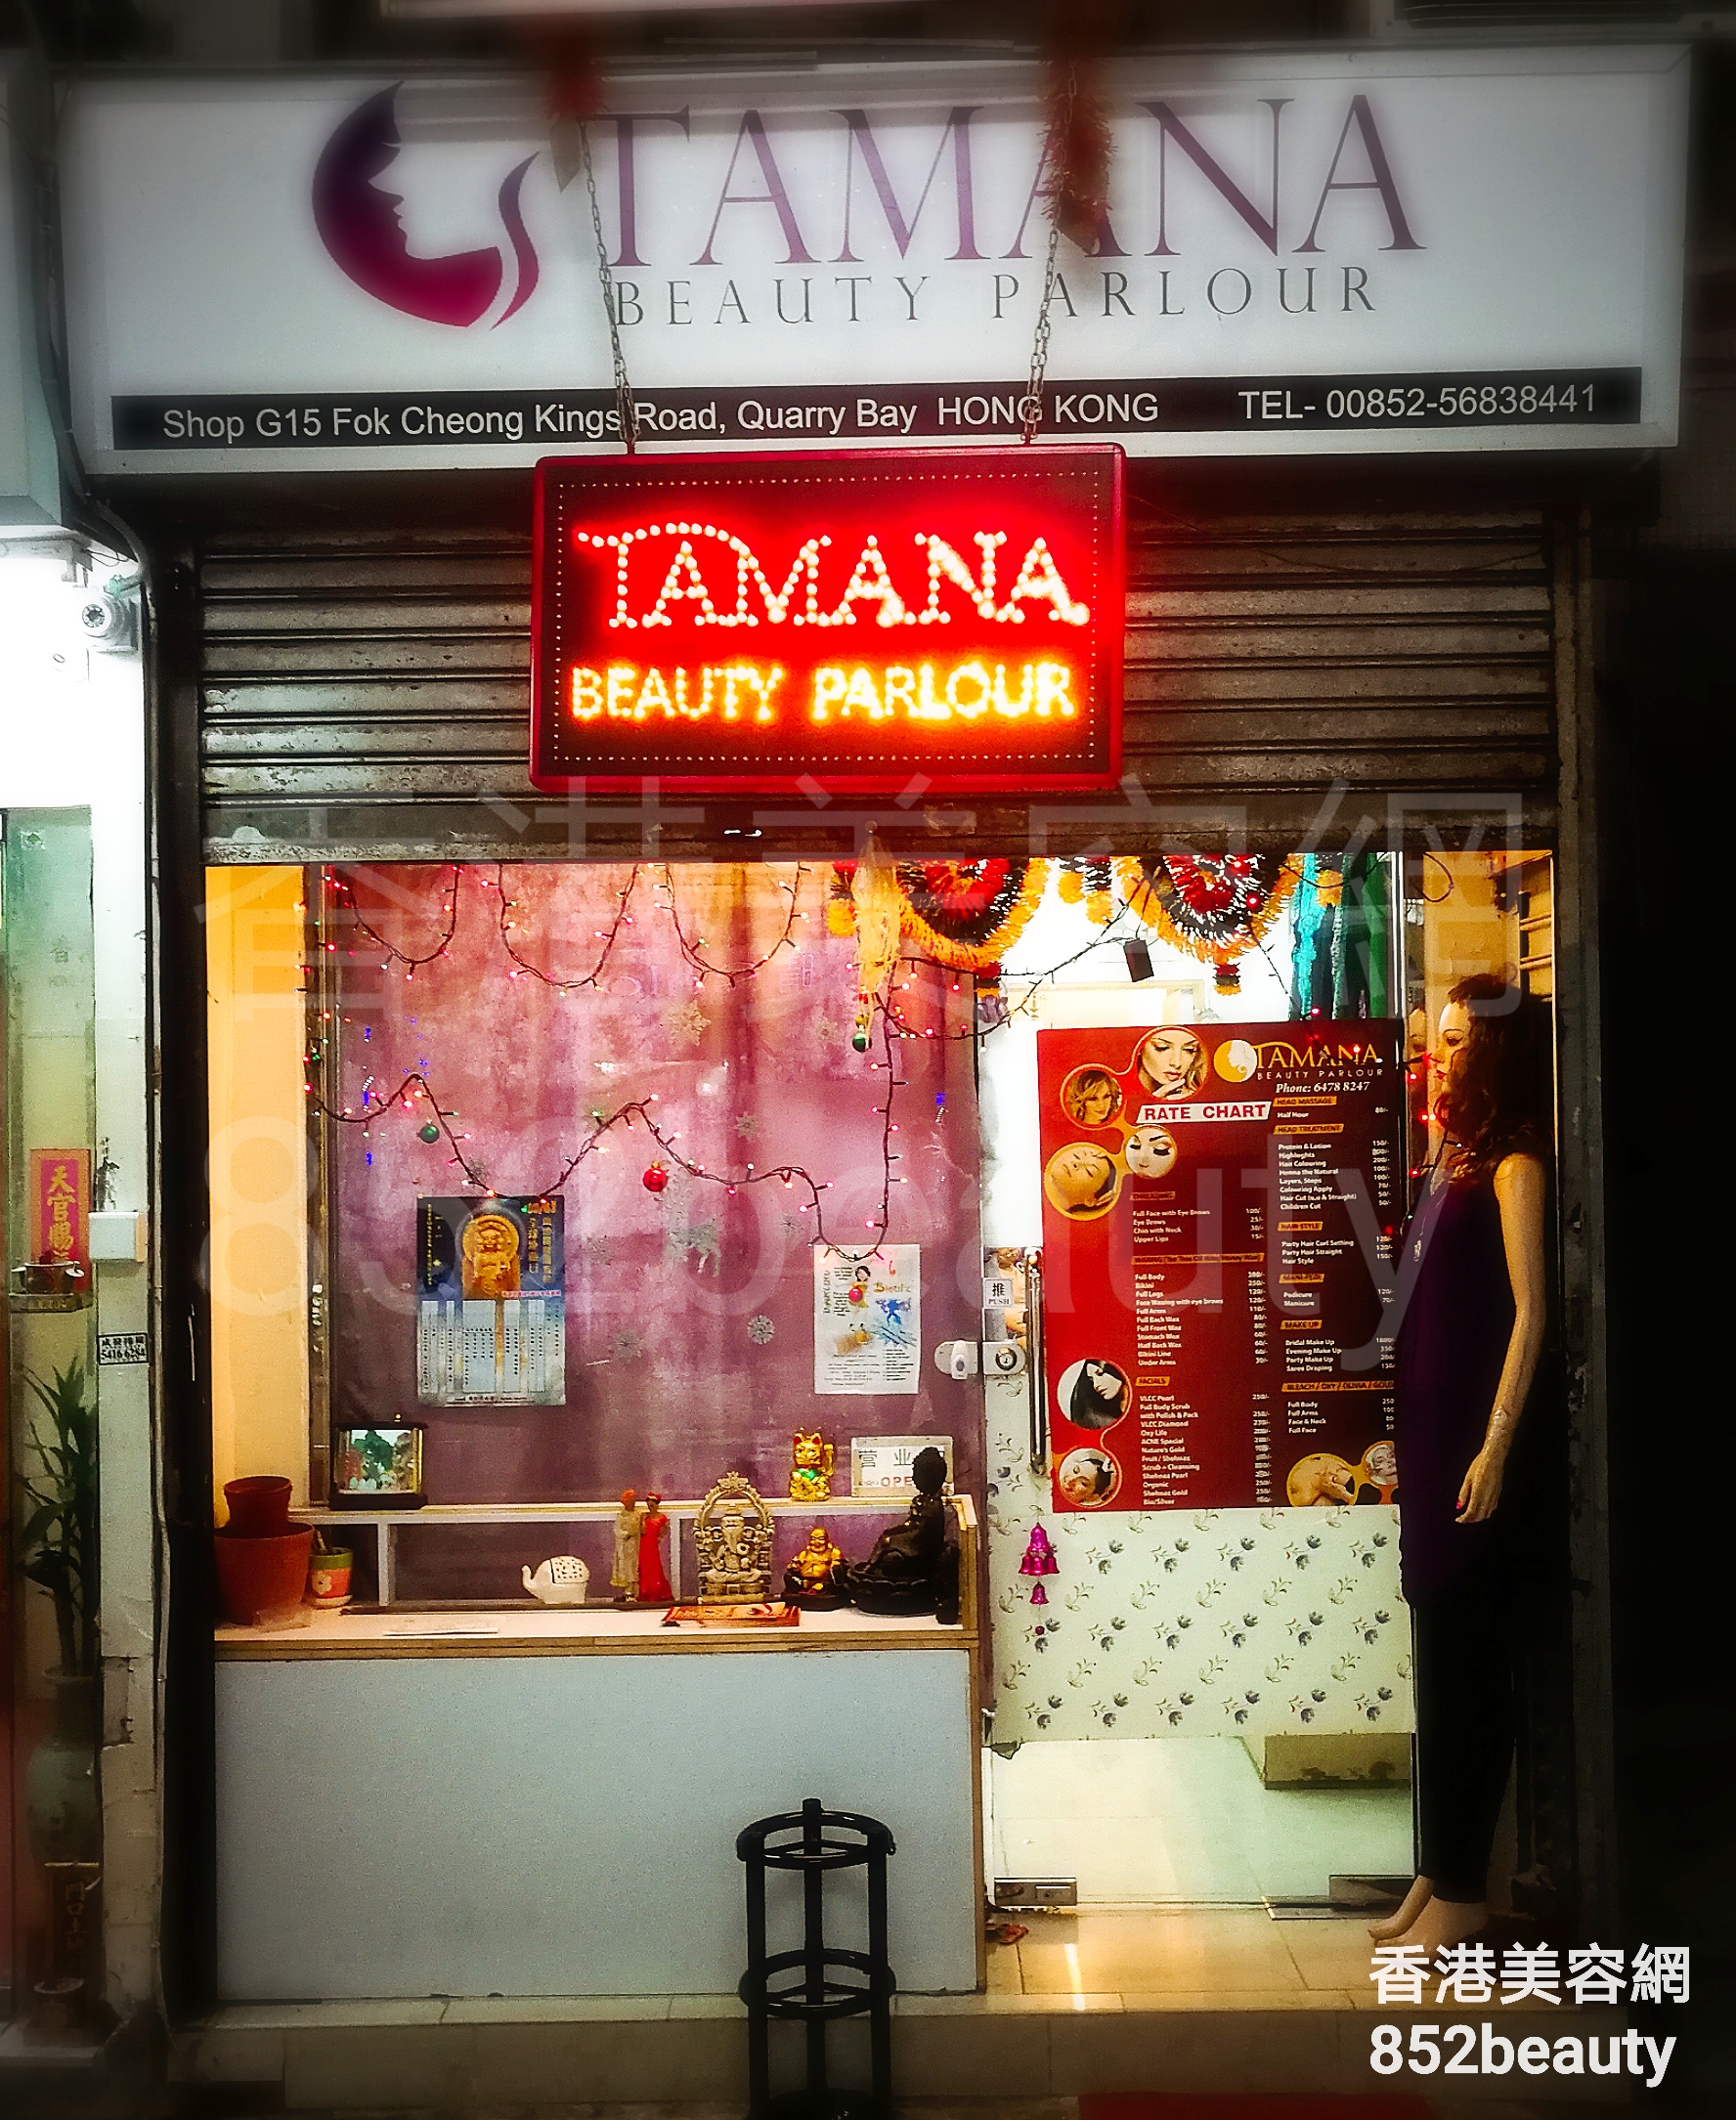 香港美容網 Hong Kong Beauty Salon 美容院 / 美容師: Tamana Beauty Parlour